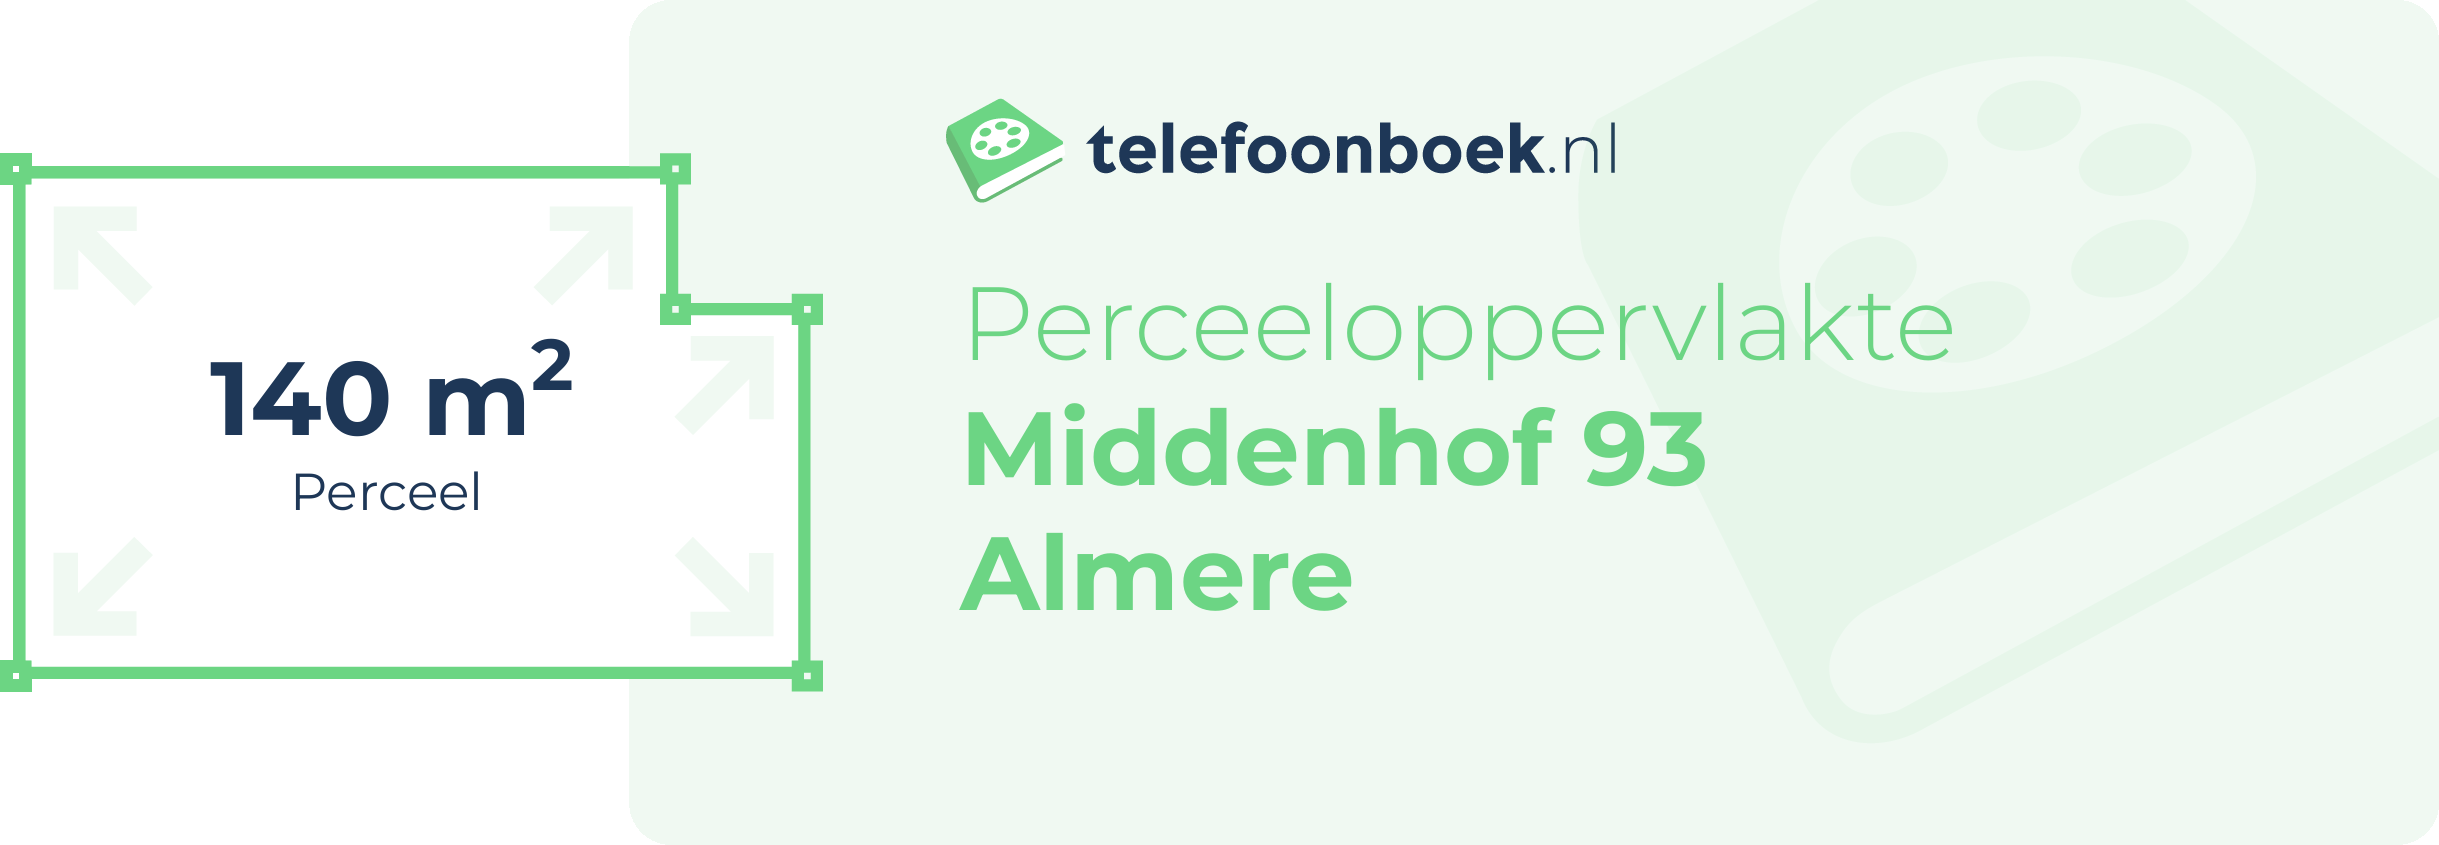 Perceeloppervlakte Middenhof 93 Almere